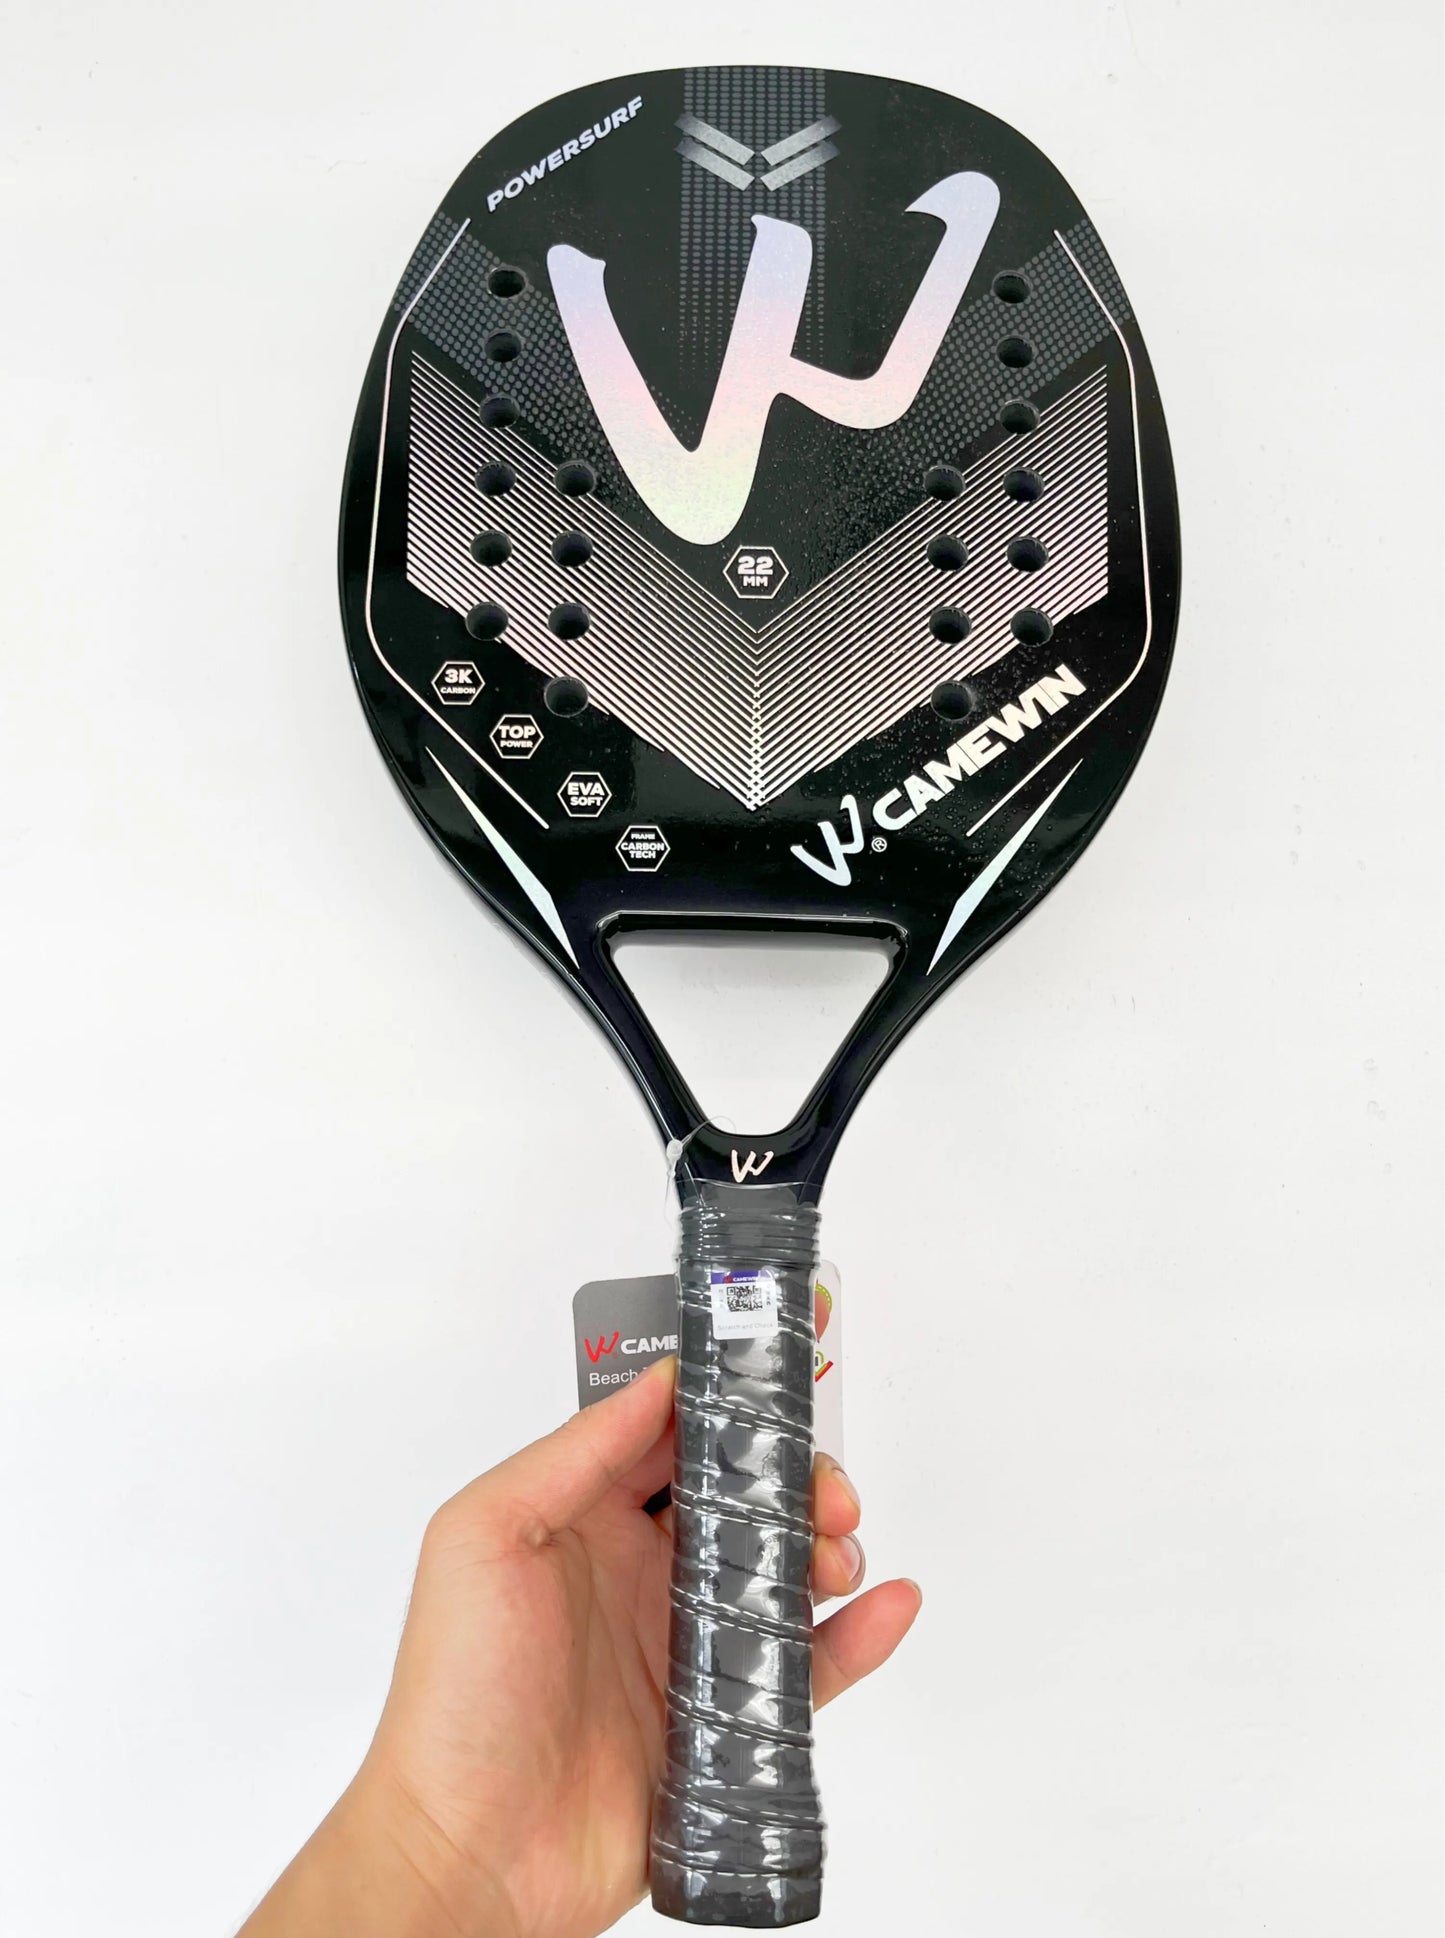 OndaCarbonio 3K Beach Tennis Racket: Ideal for Beginners, Rough Surface Treatment